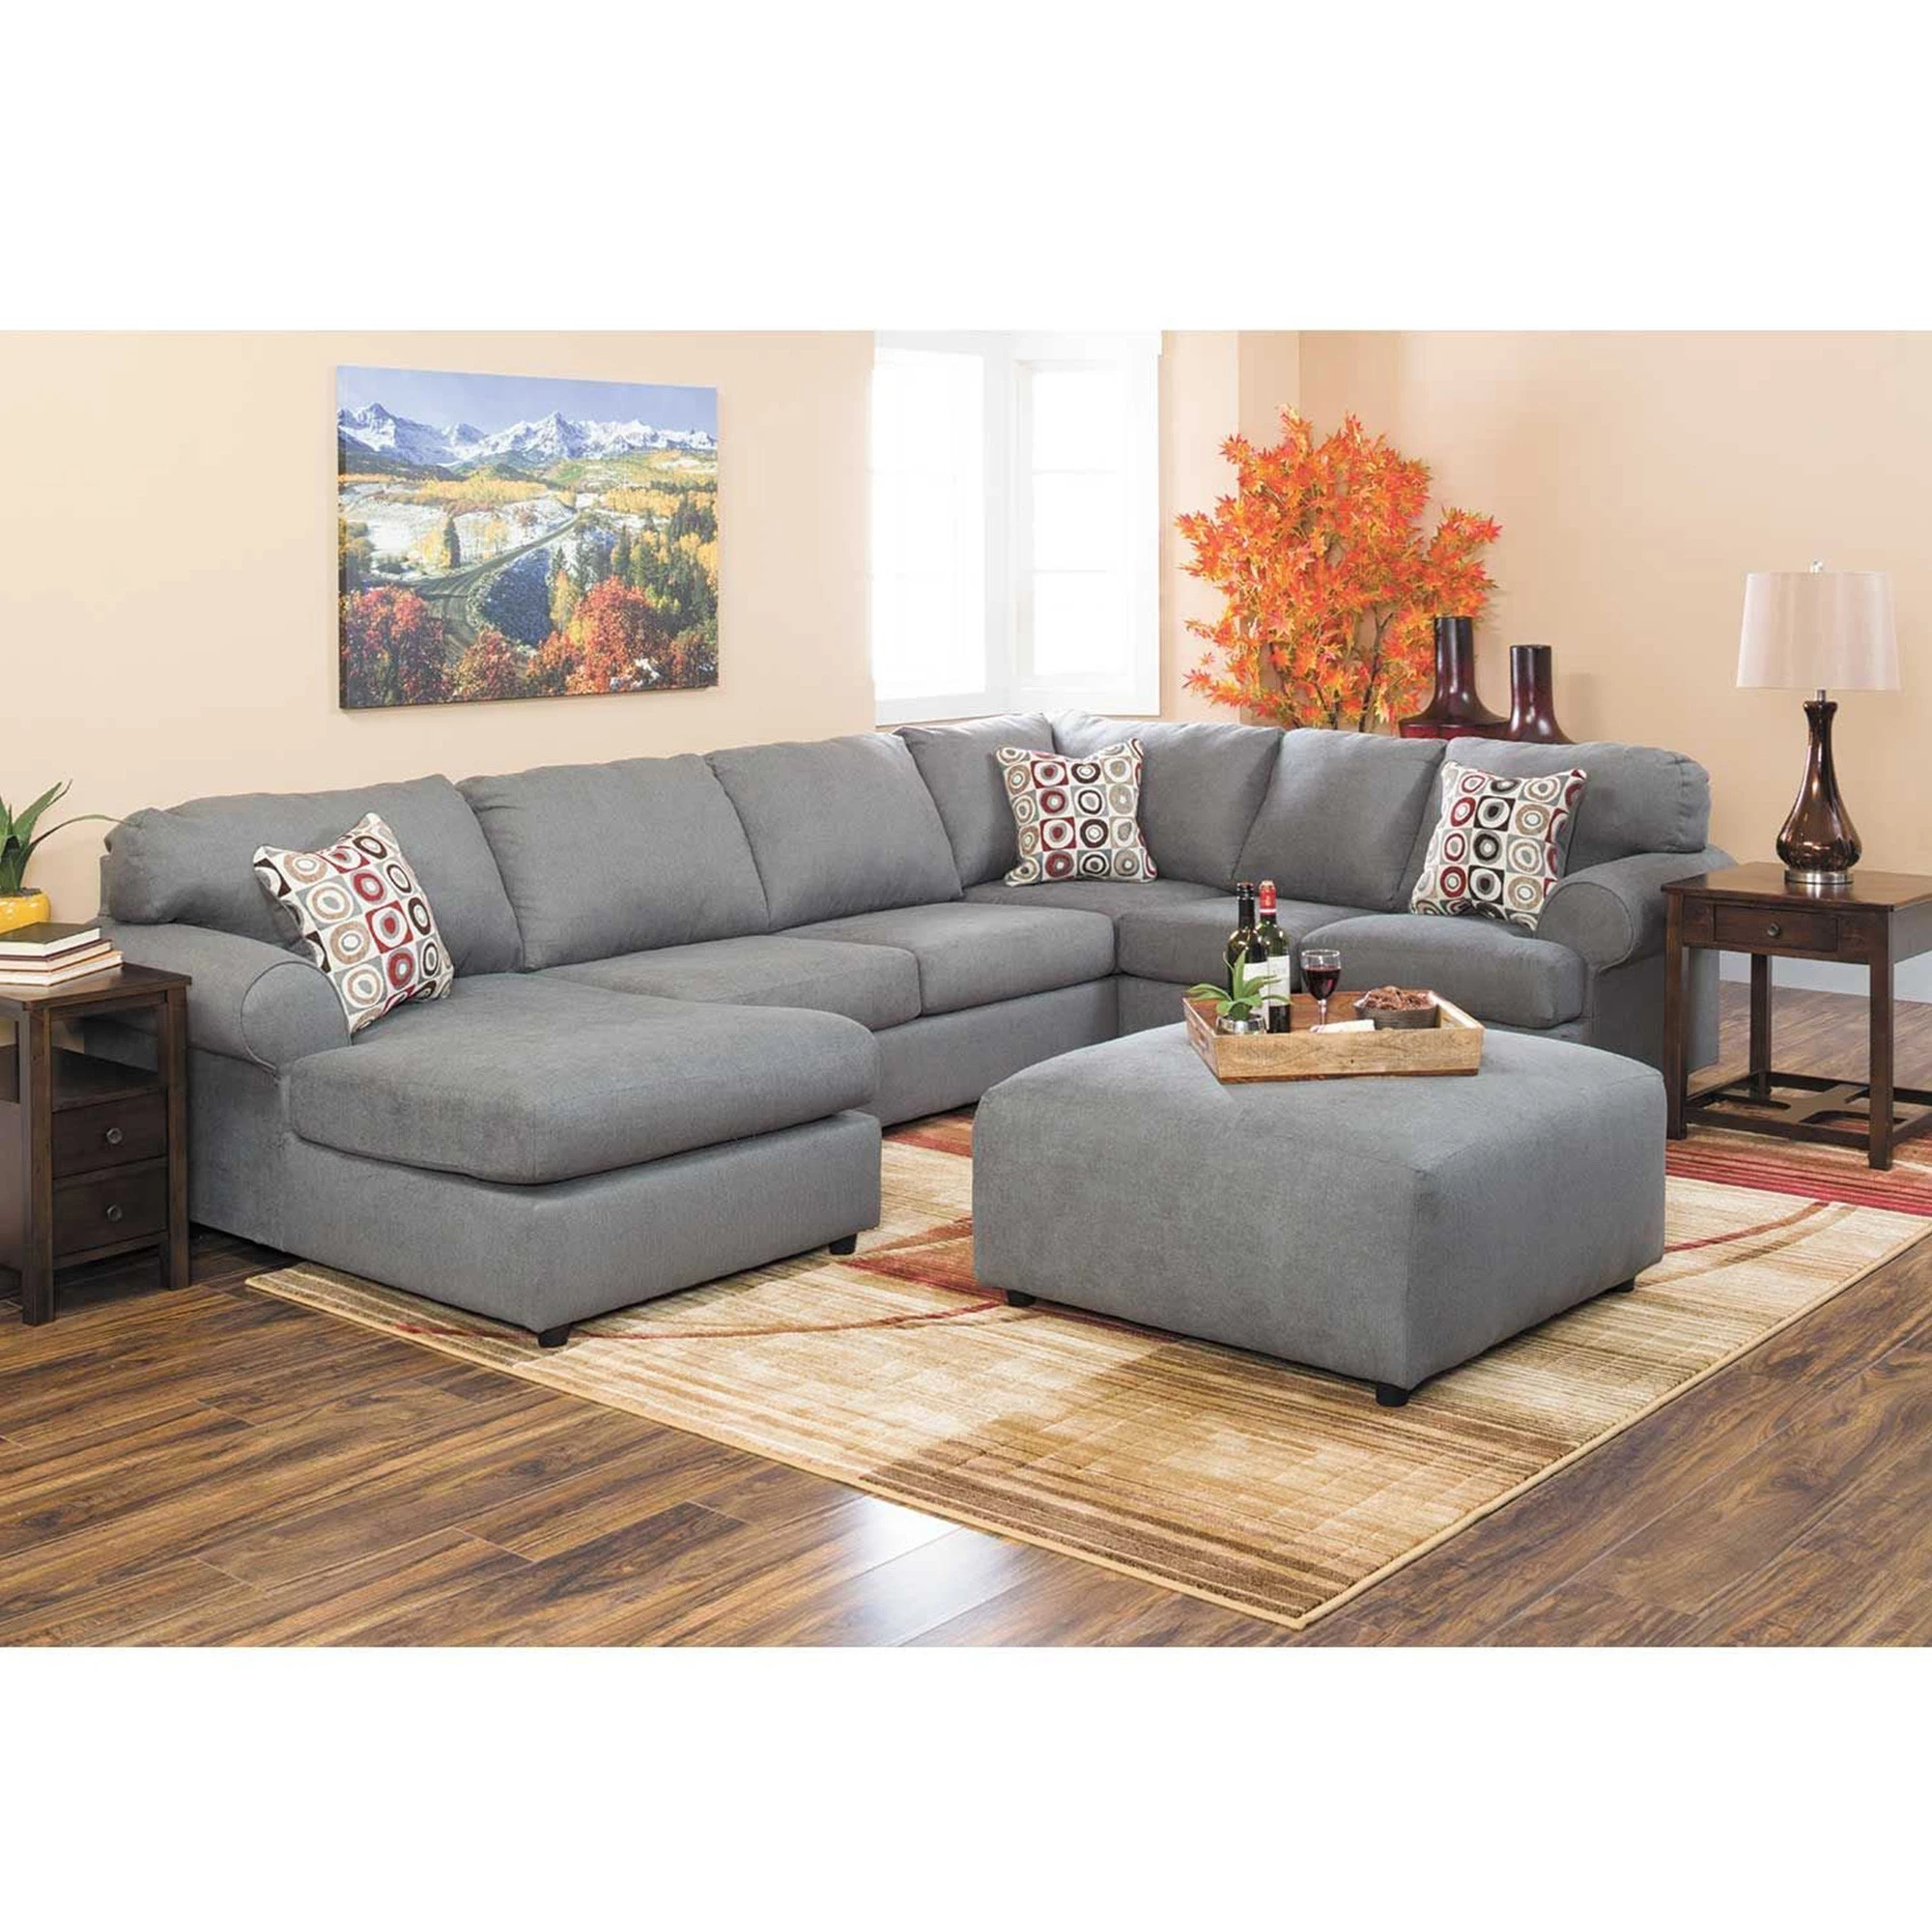 American furniture warehouse 5 seats fabric corner sofa with modern home design high quality sofas